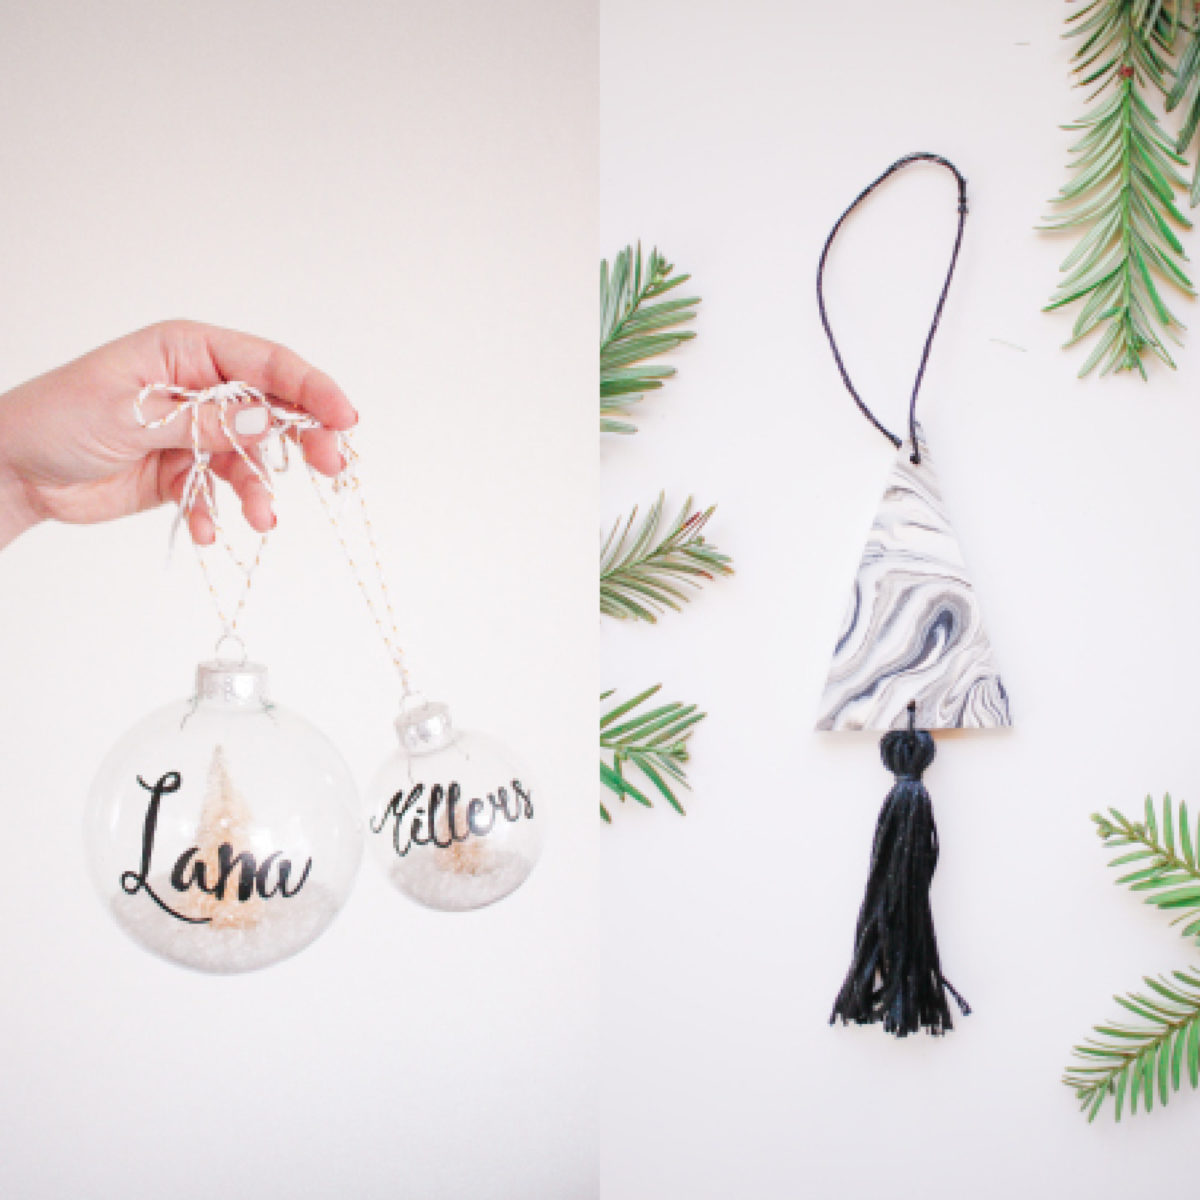 2 Easy DIY Christmas Ornaments